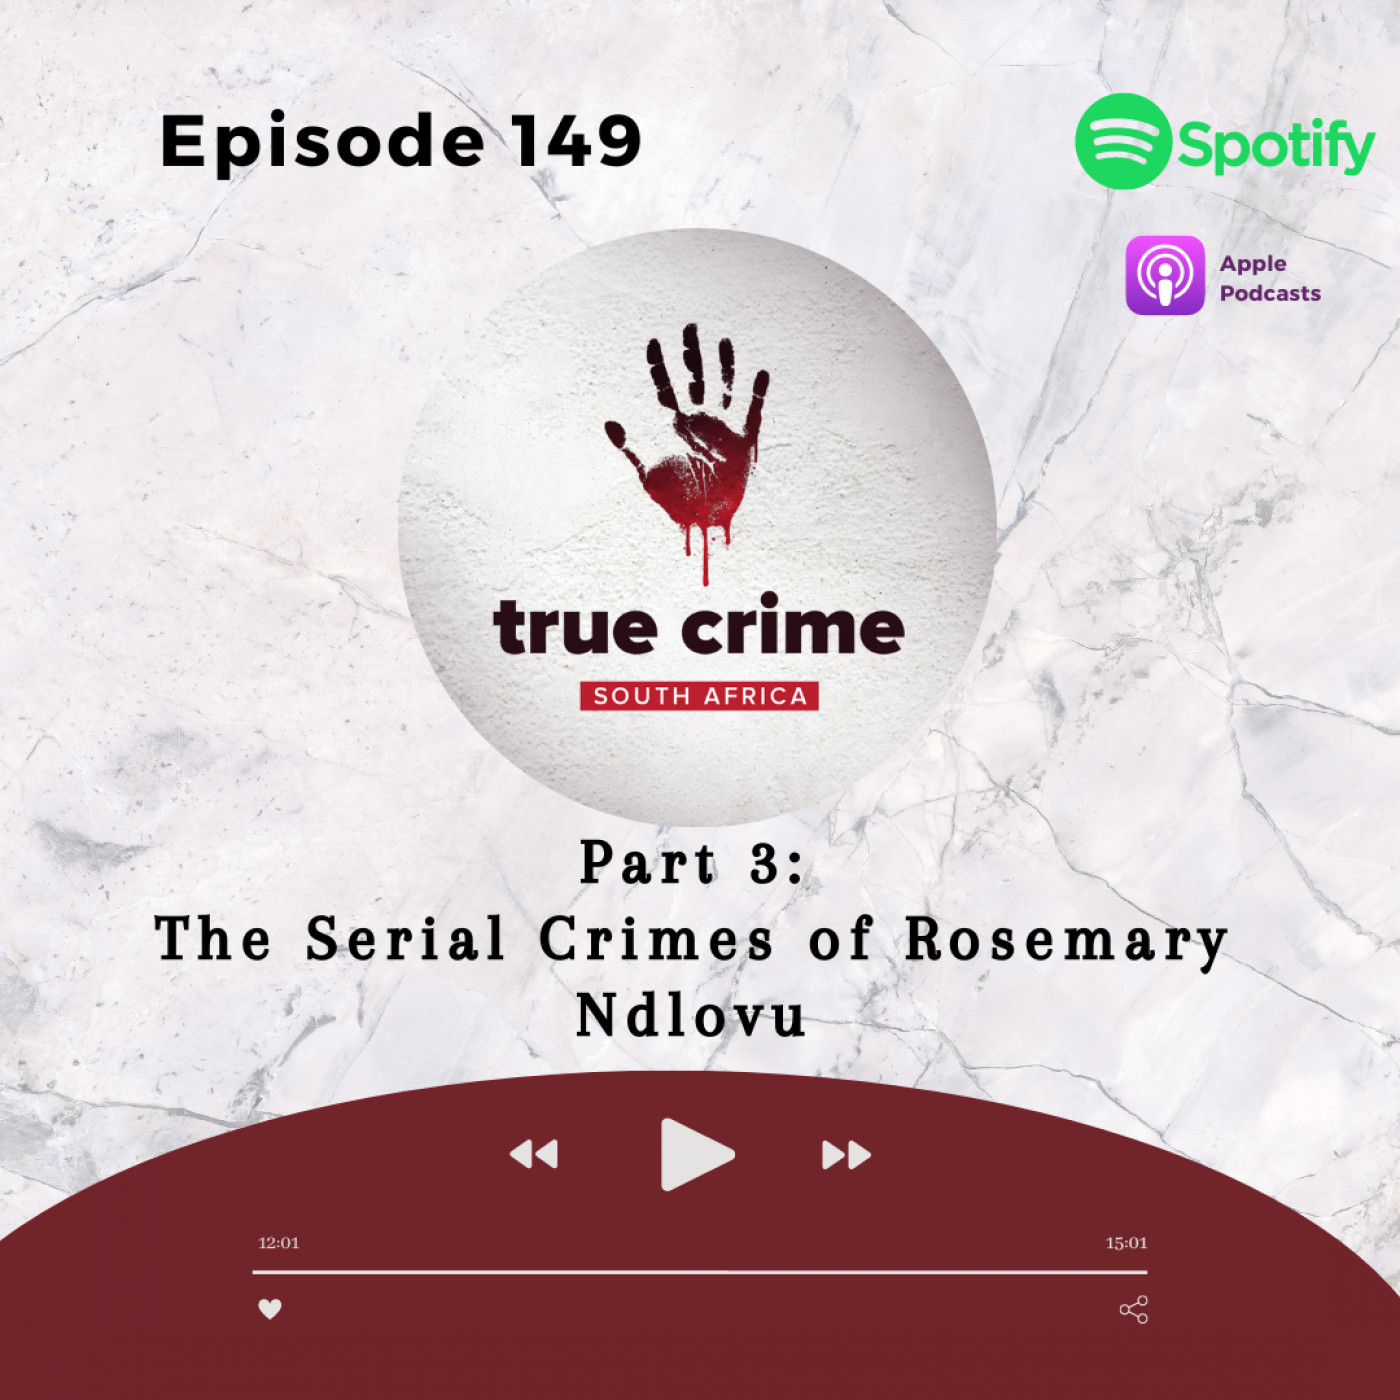 Episode 149 The Serial Crimes of Rosemary Ndlovu Part 3